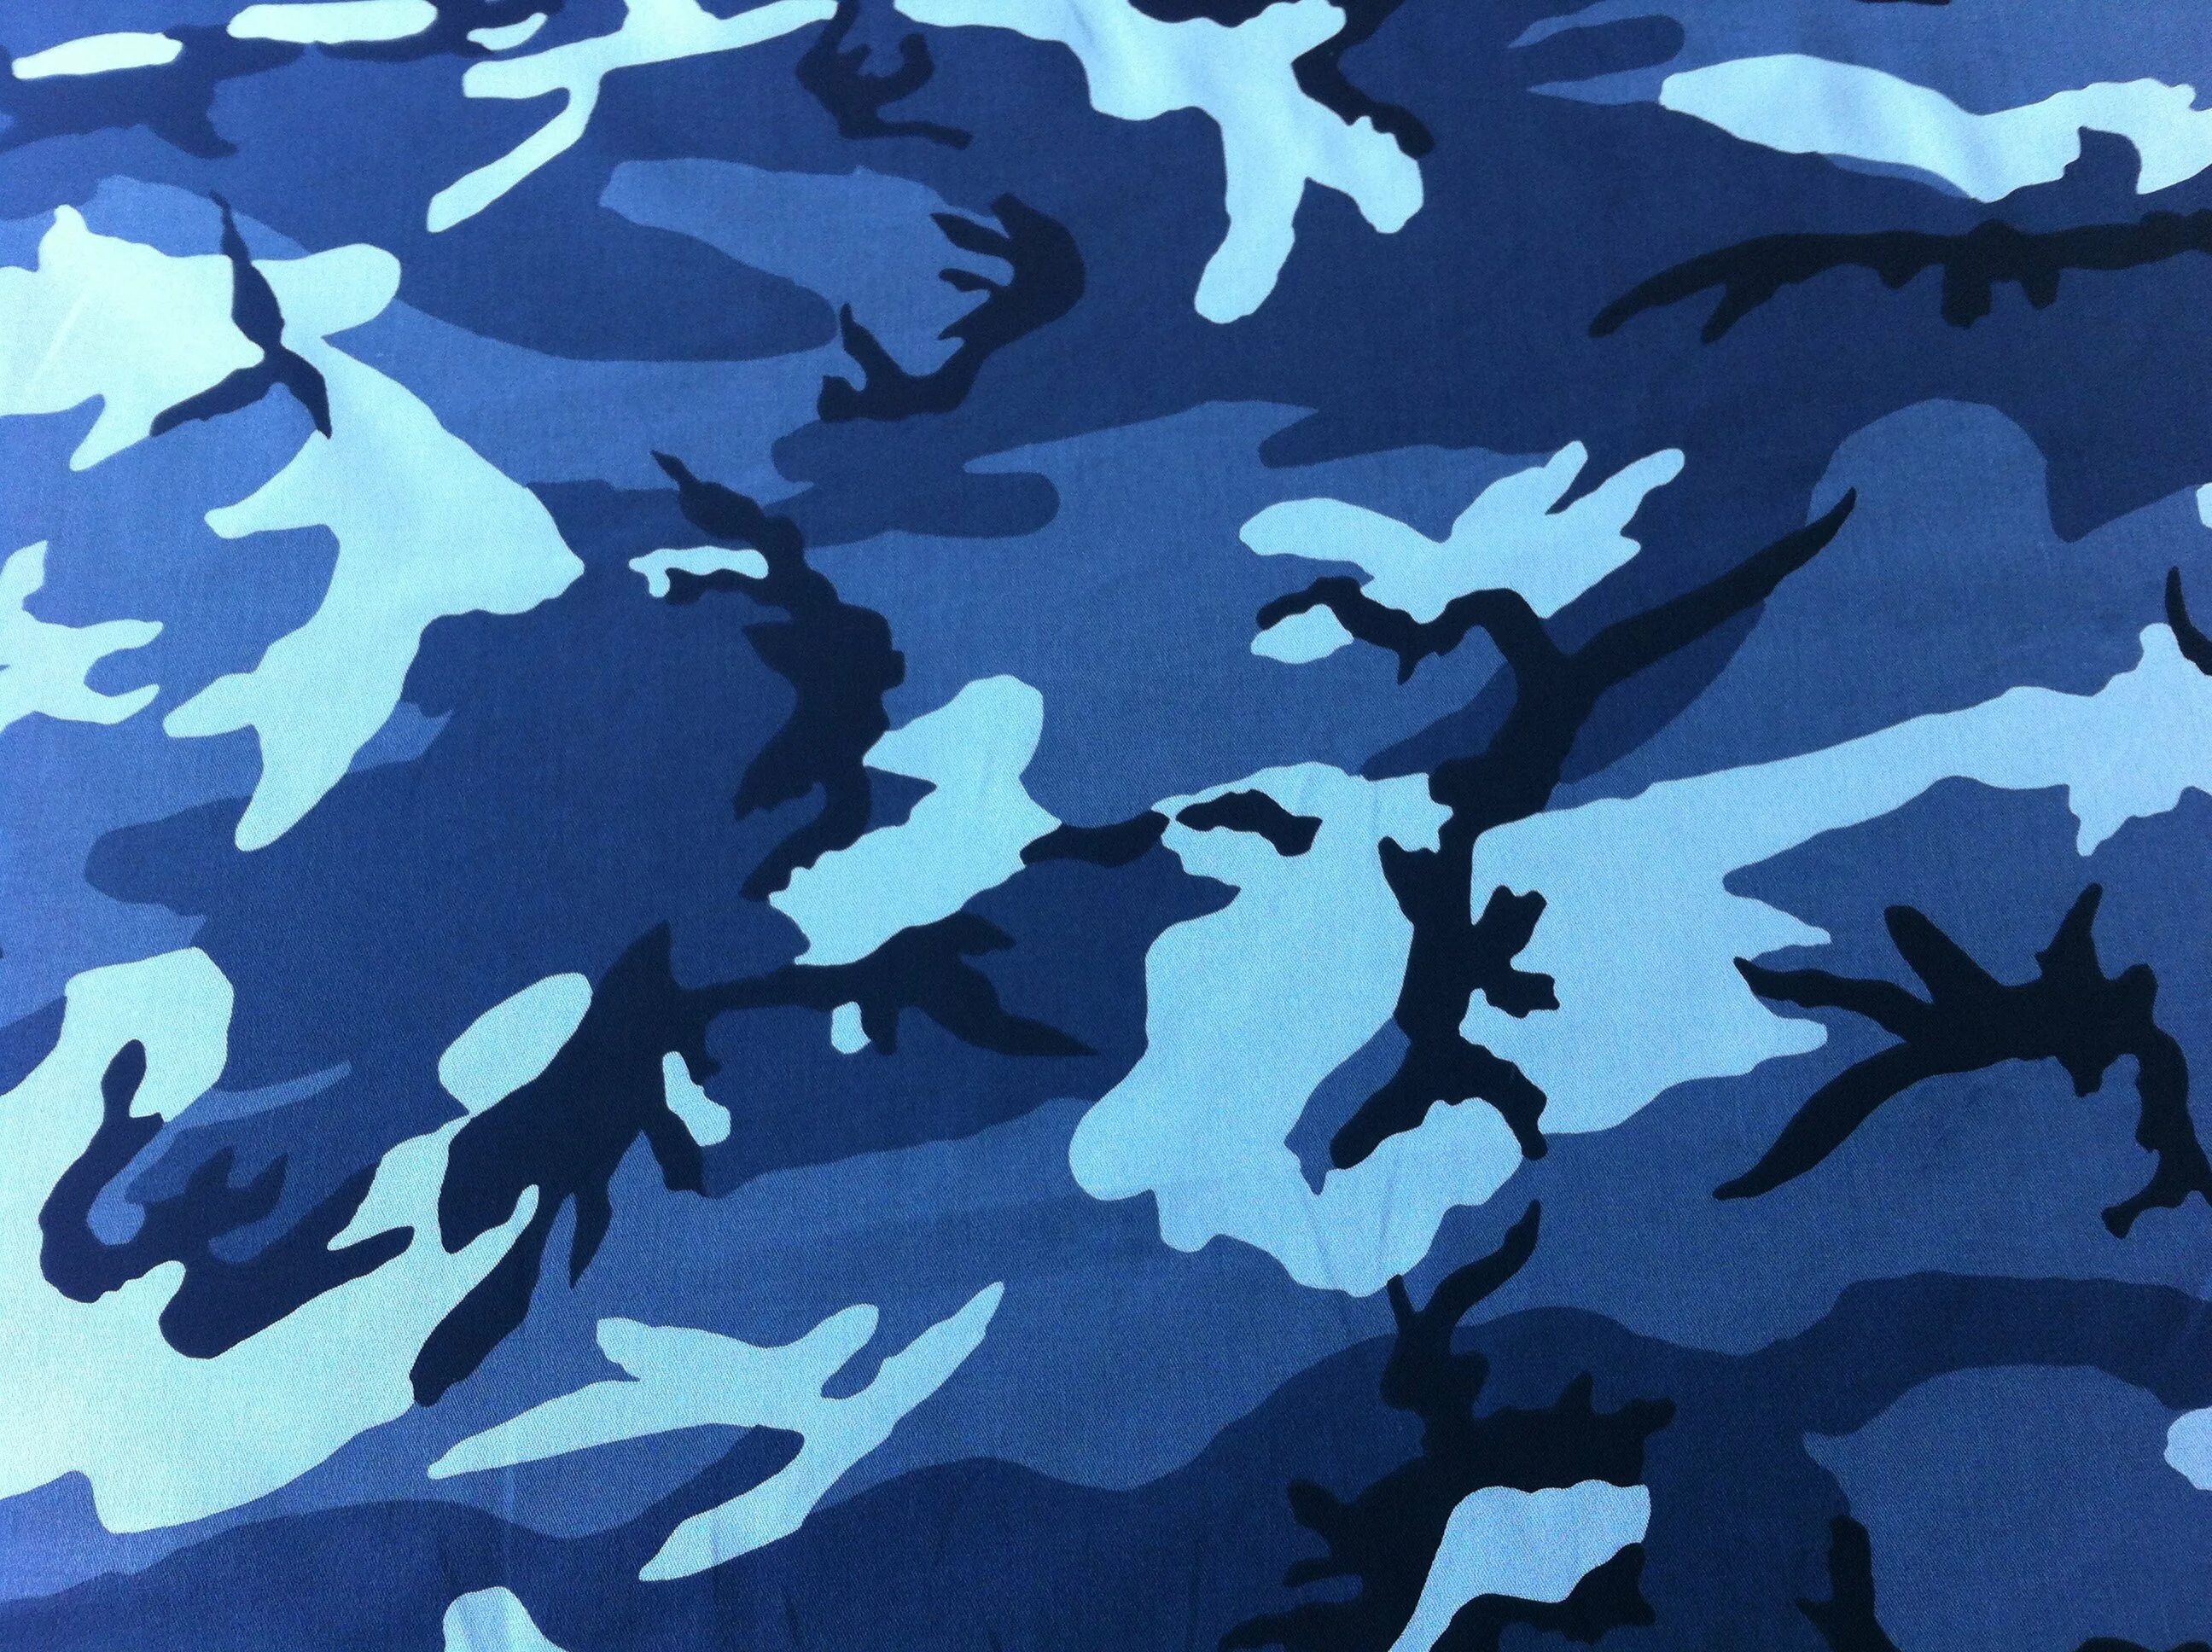 Woodland Camouflage 4r. Bape камуфляж. Ткань Меркурий маскирующей расцветки ФСИН. Камуфляж Камо синий. Блю хаки